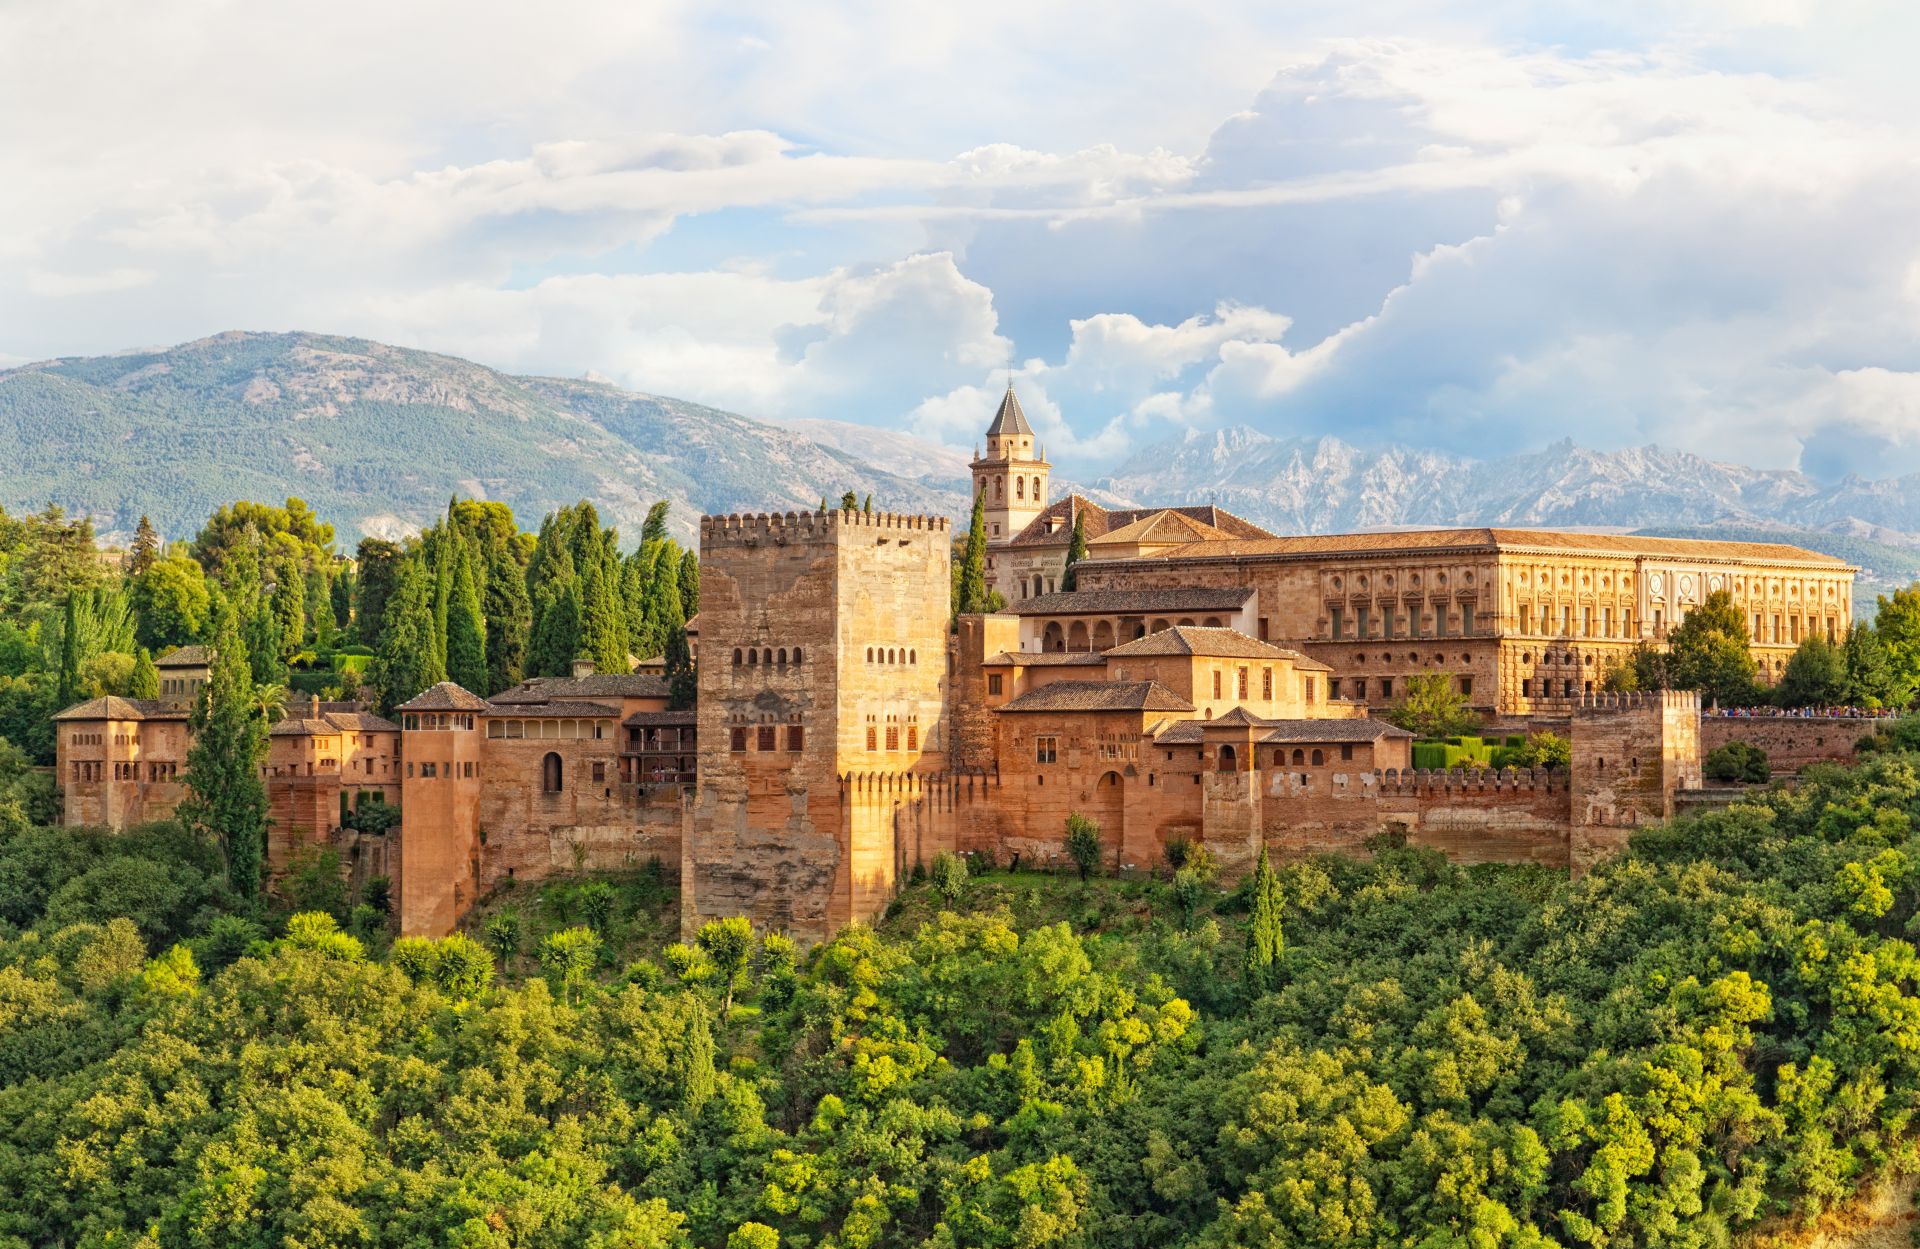 old arabic fortress of Alhambra, Granada, Spain